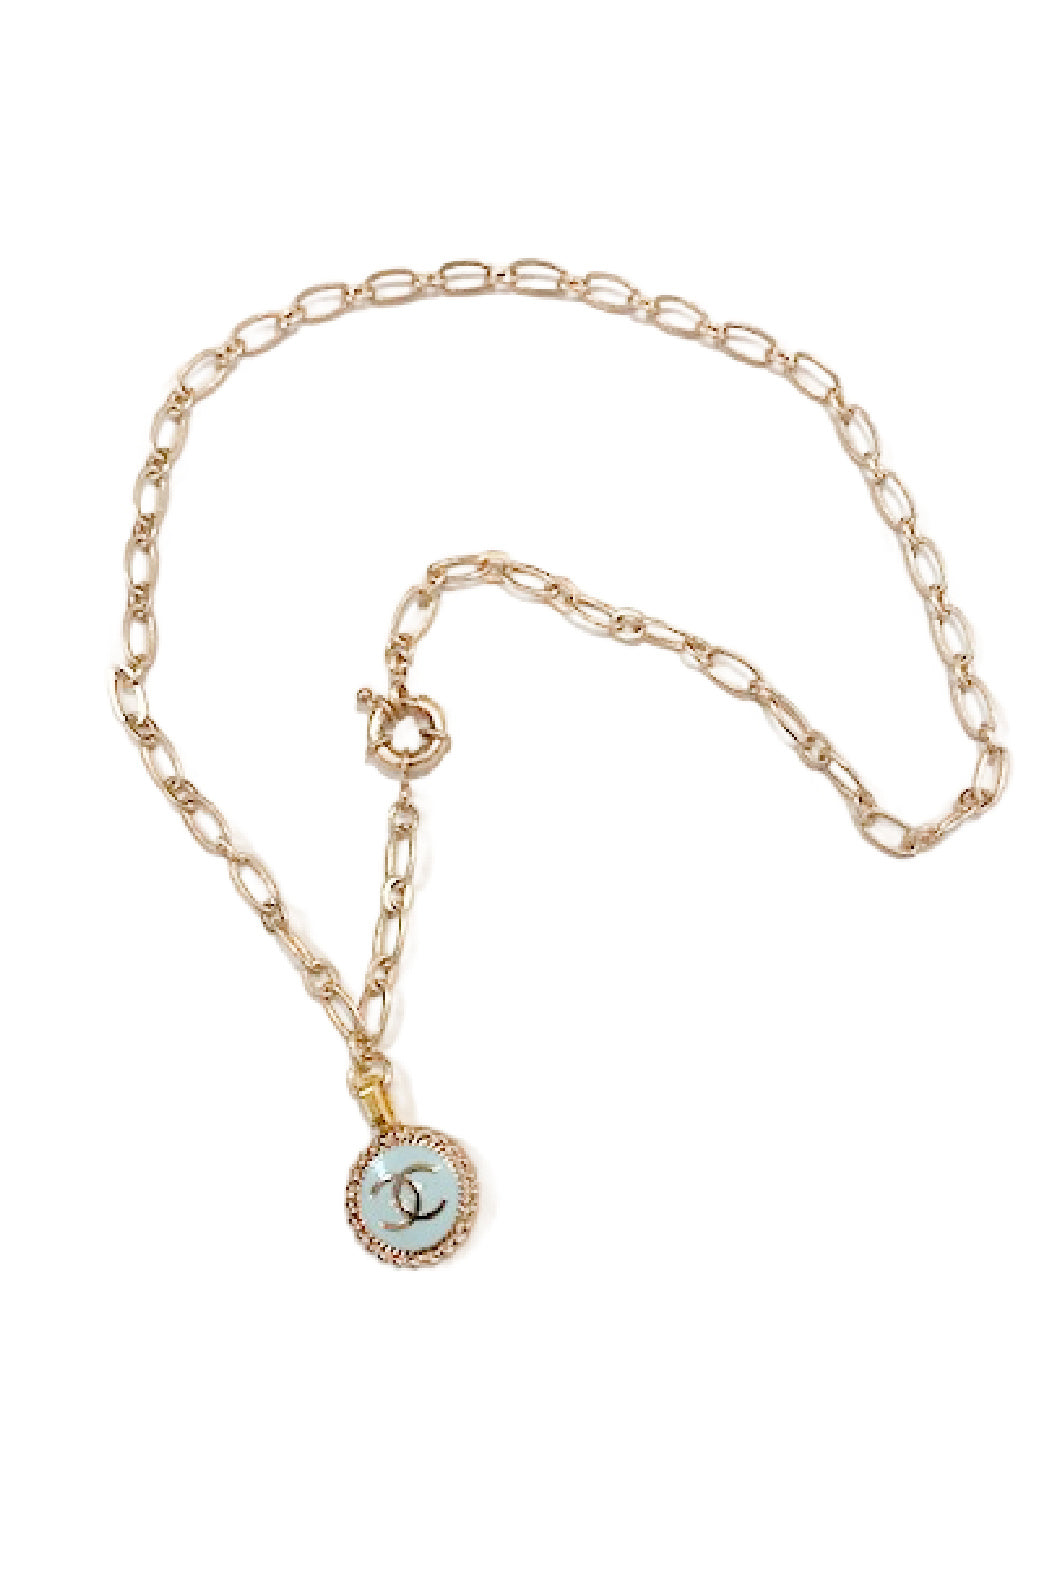 Aqua Chanel Button Necklace